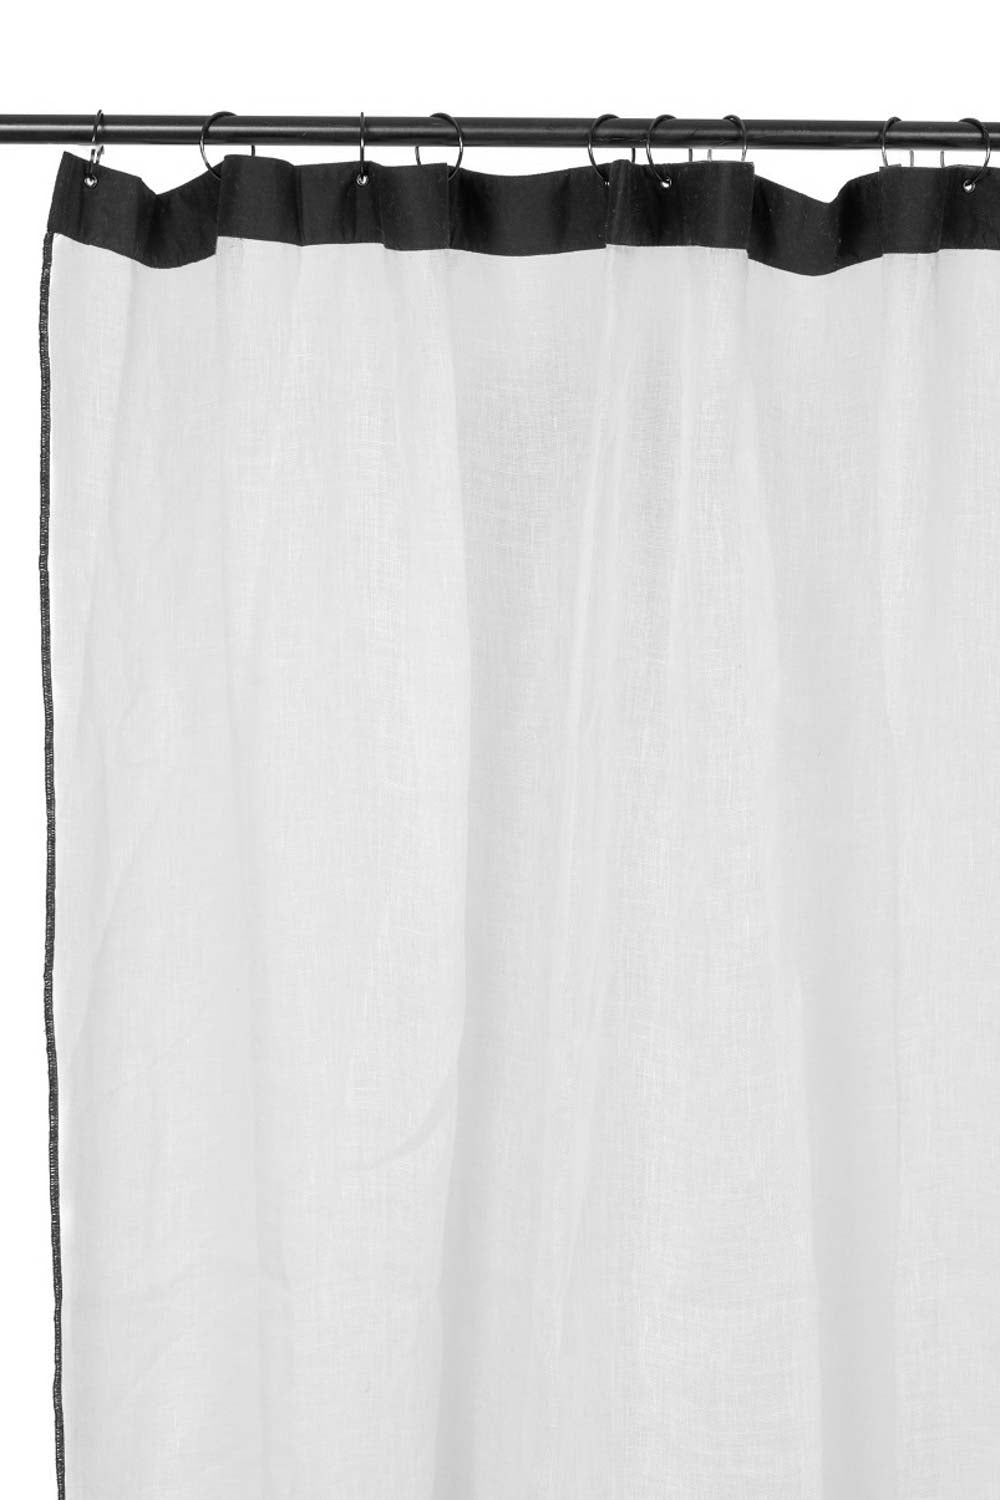 rideau en voile de lin bonifacio 140x280 cm blanc-harmony haomy